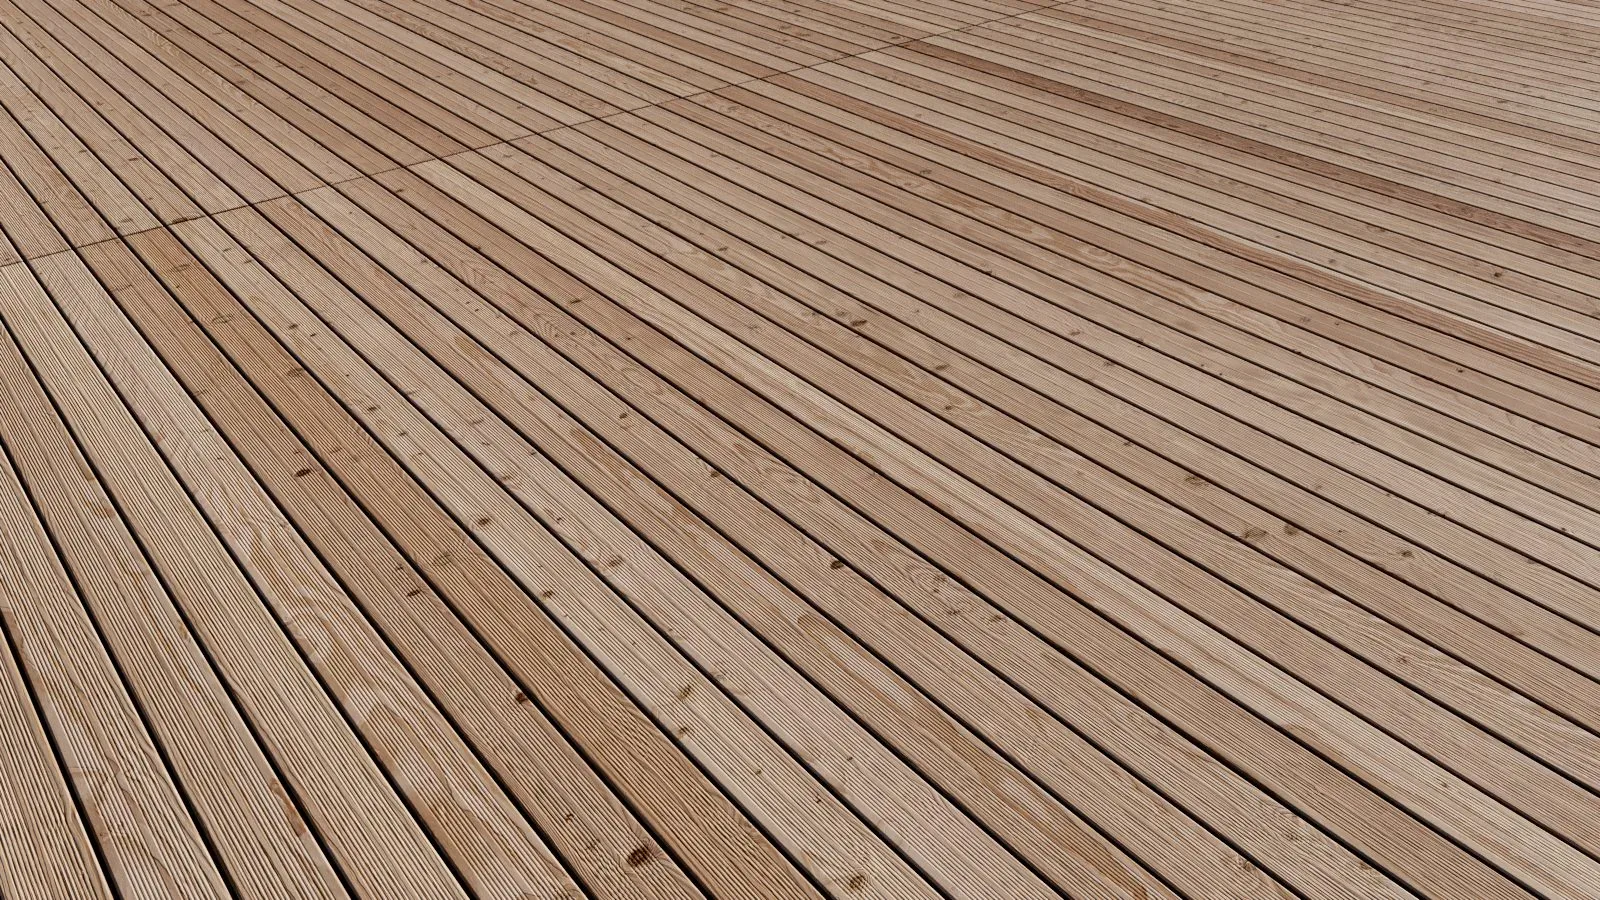 Woodfloors vol03 Terrace 8K Seamless PBR Materials